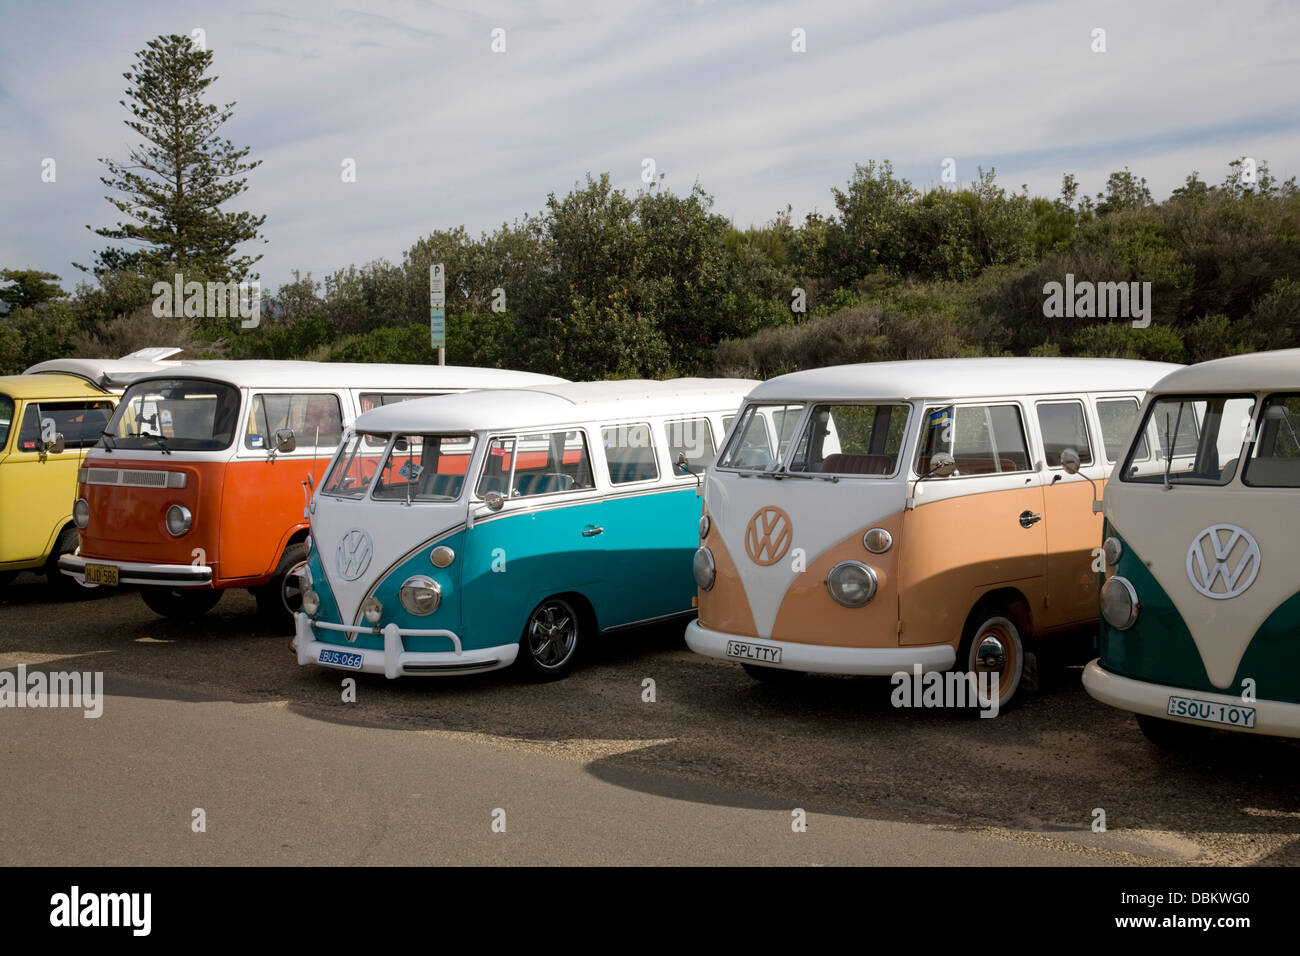 volkswagen vans at palm beach,sydney,australia Photo - Alamy